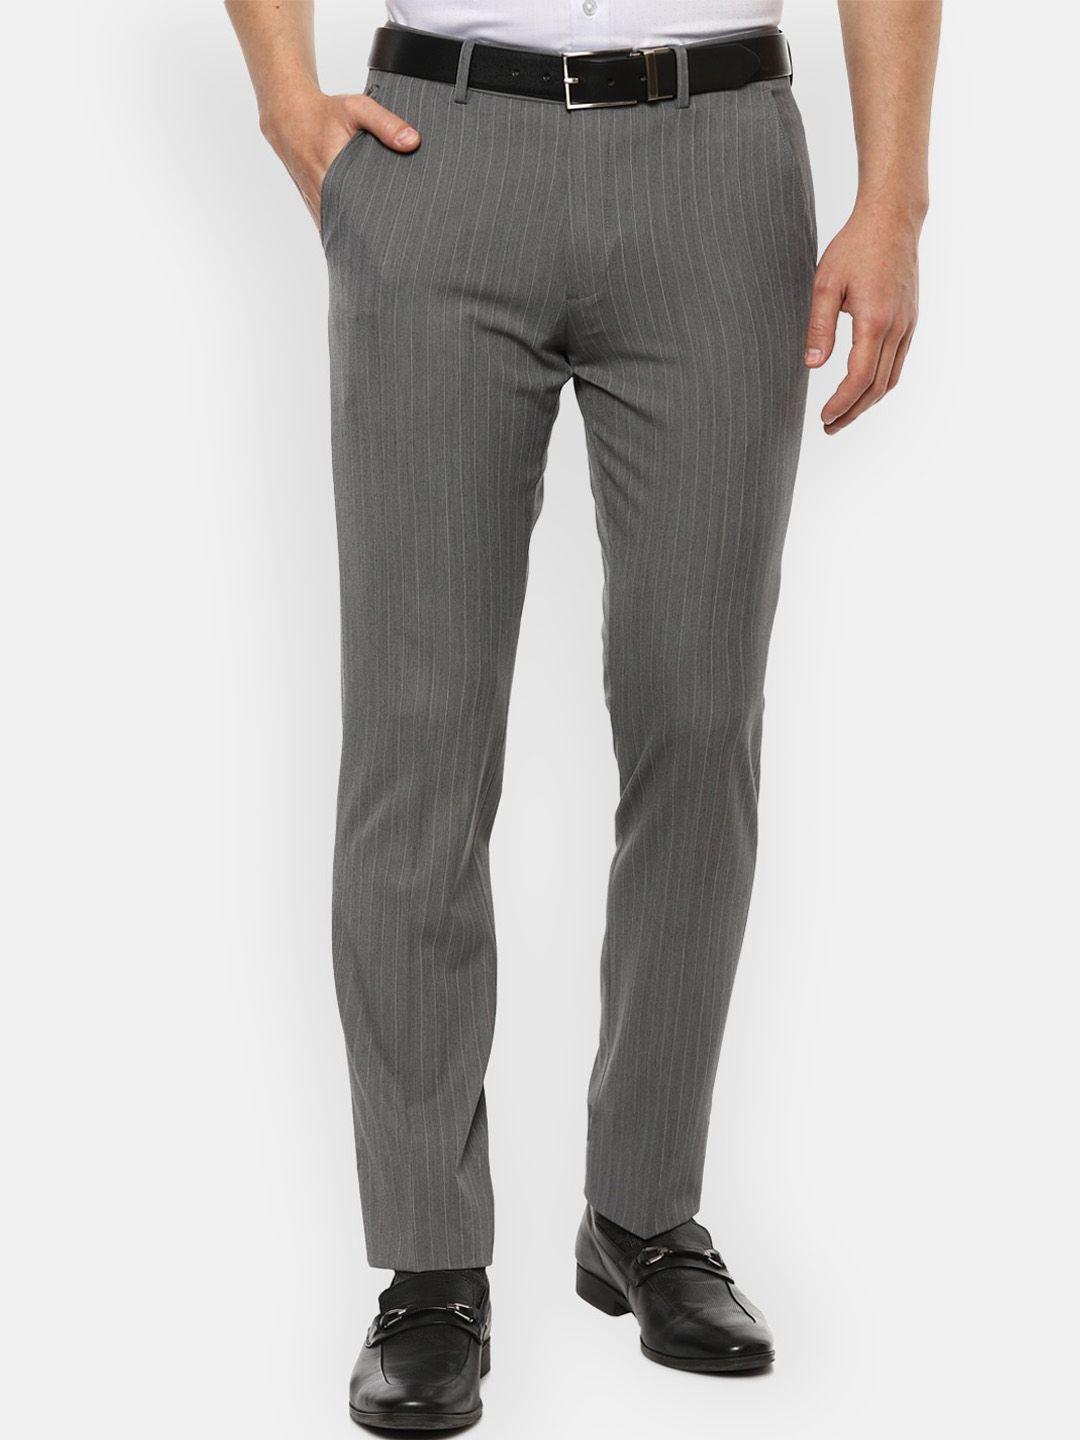 louis-philippe-permapress-men-grey-striped-slim-fit-formal-trousers